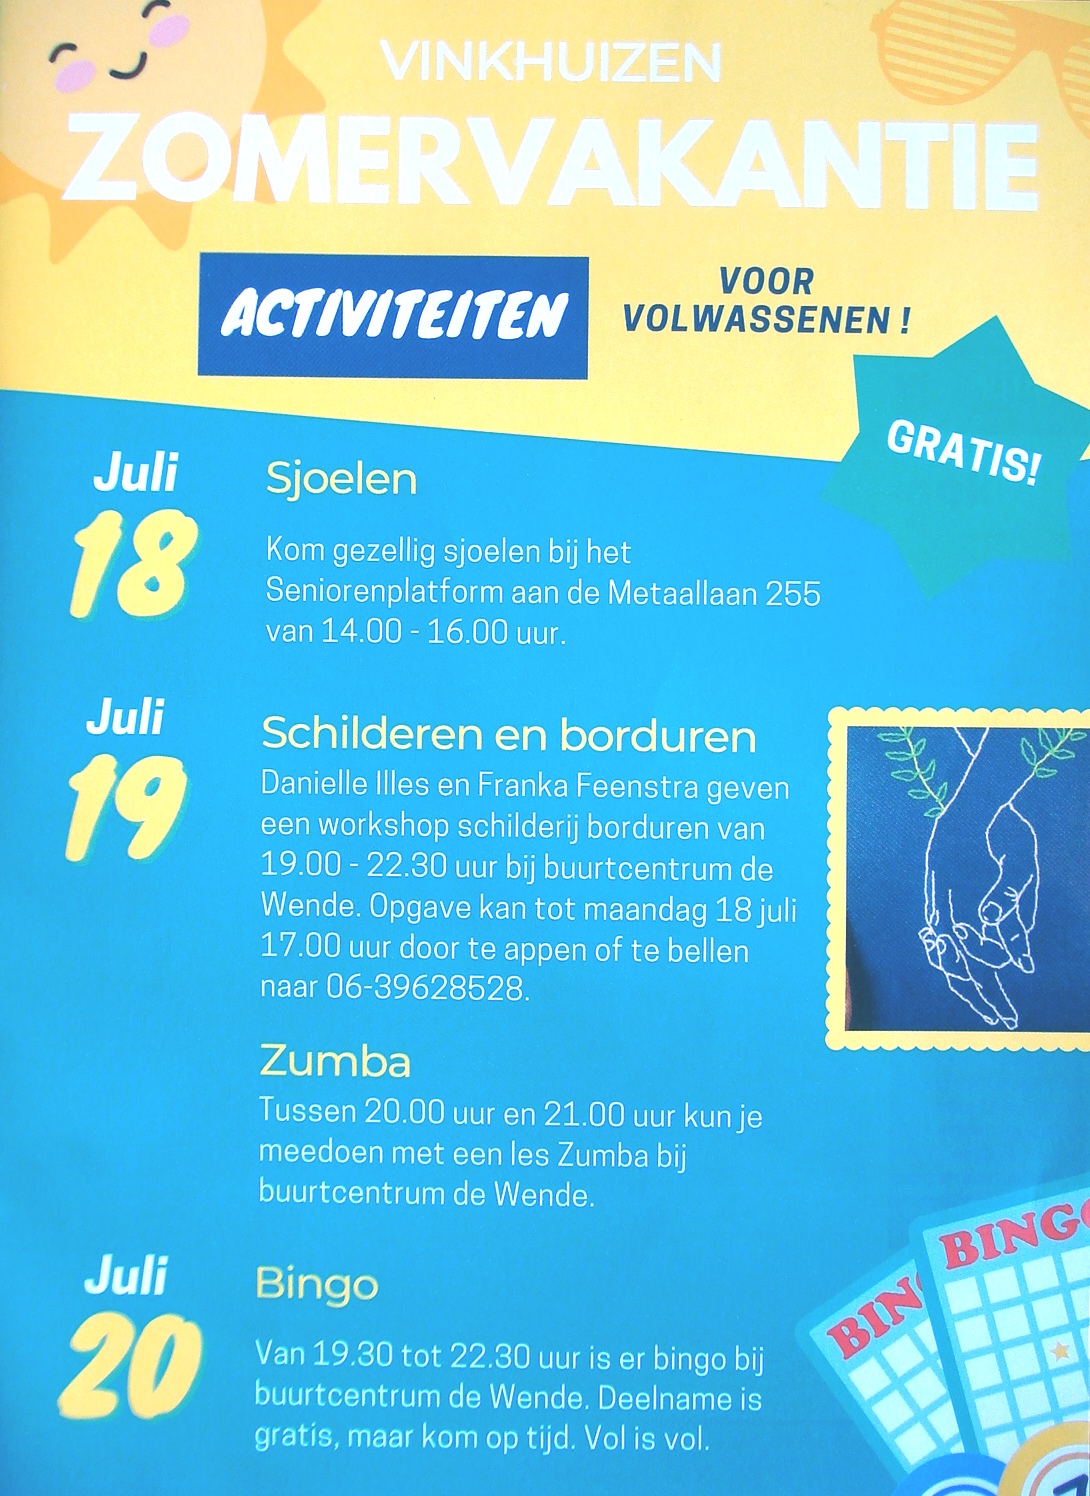 Zomerprogramma Vinkhuizen vanaf 18 juli 2022